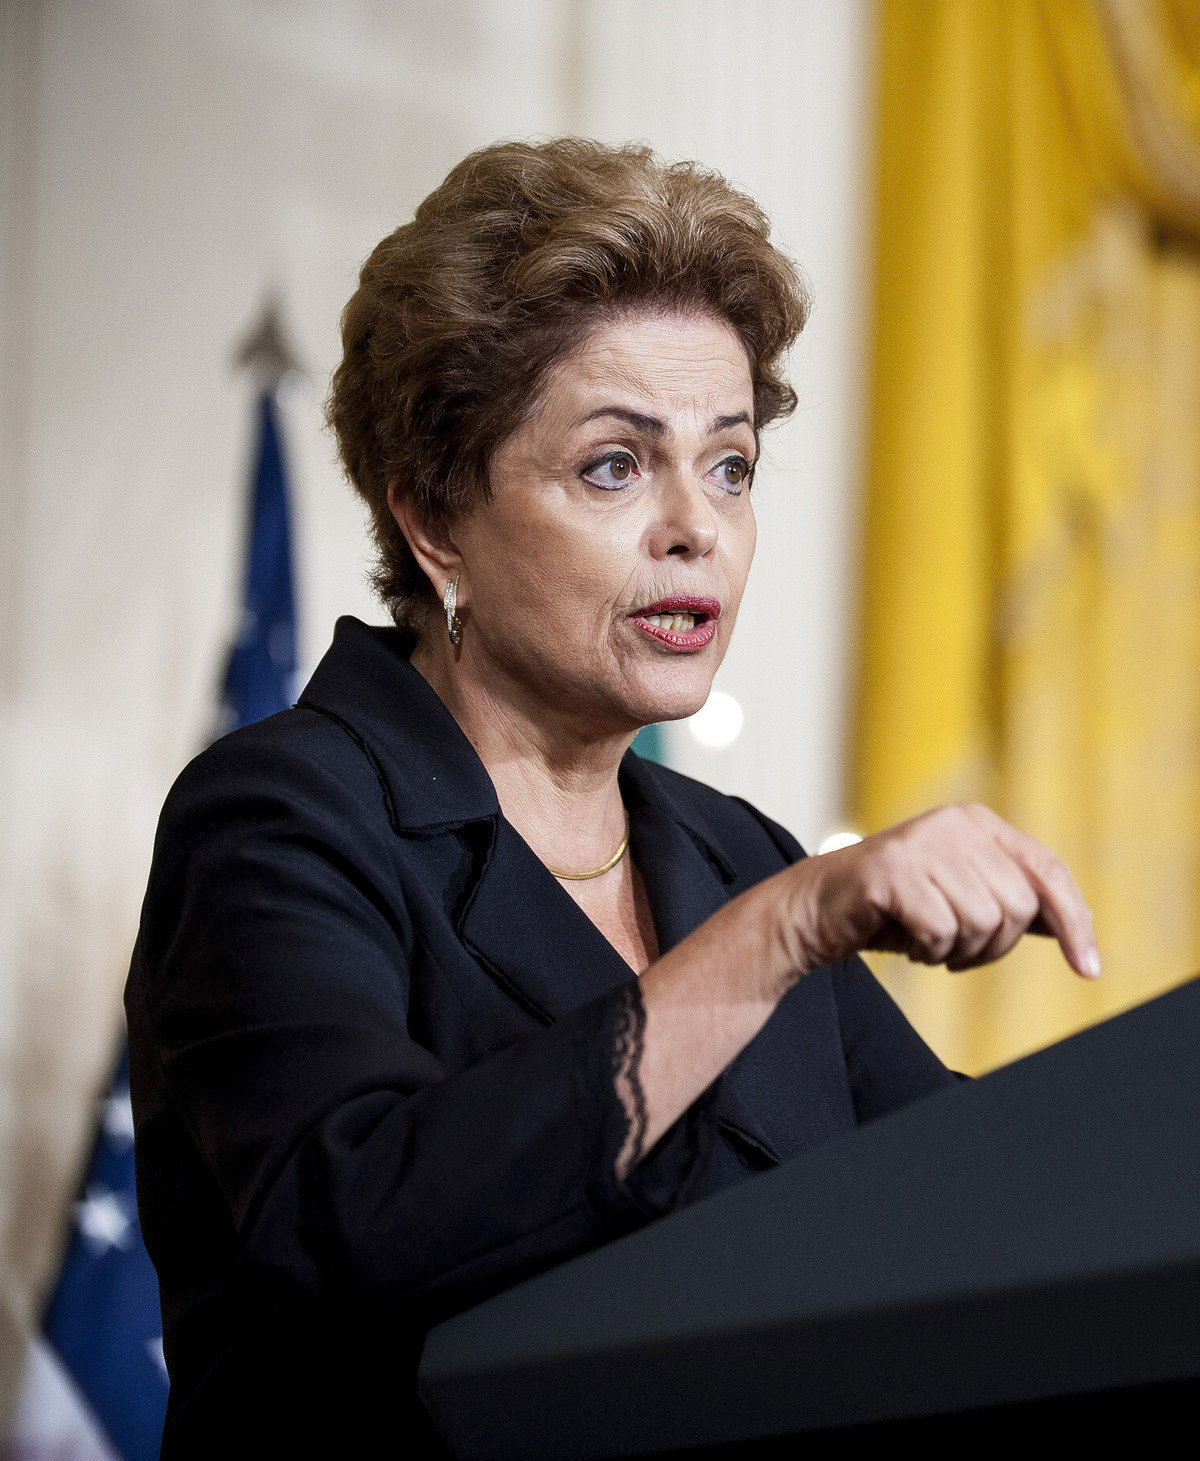 Dilma Rousseff, Brazil's president